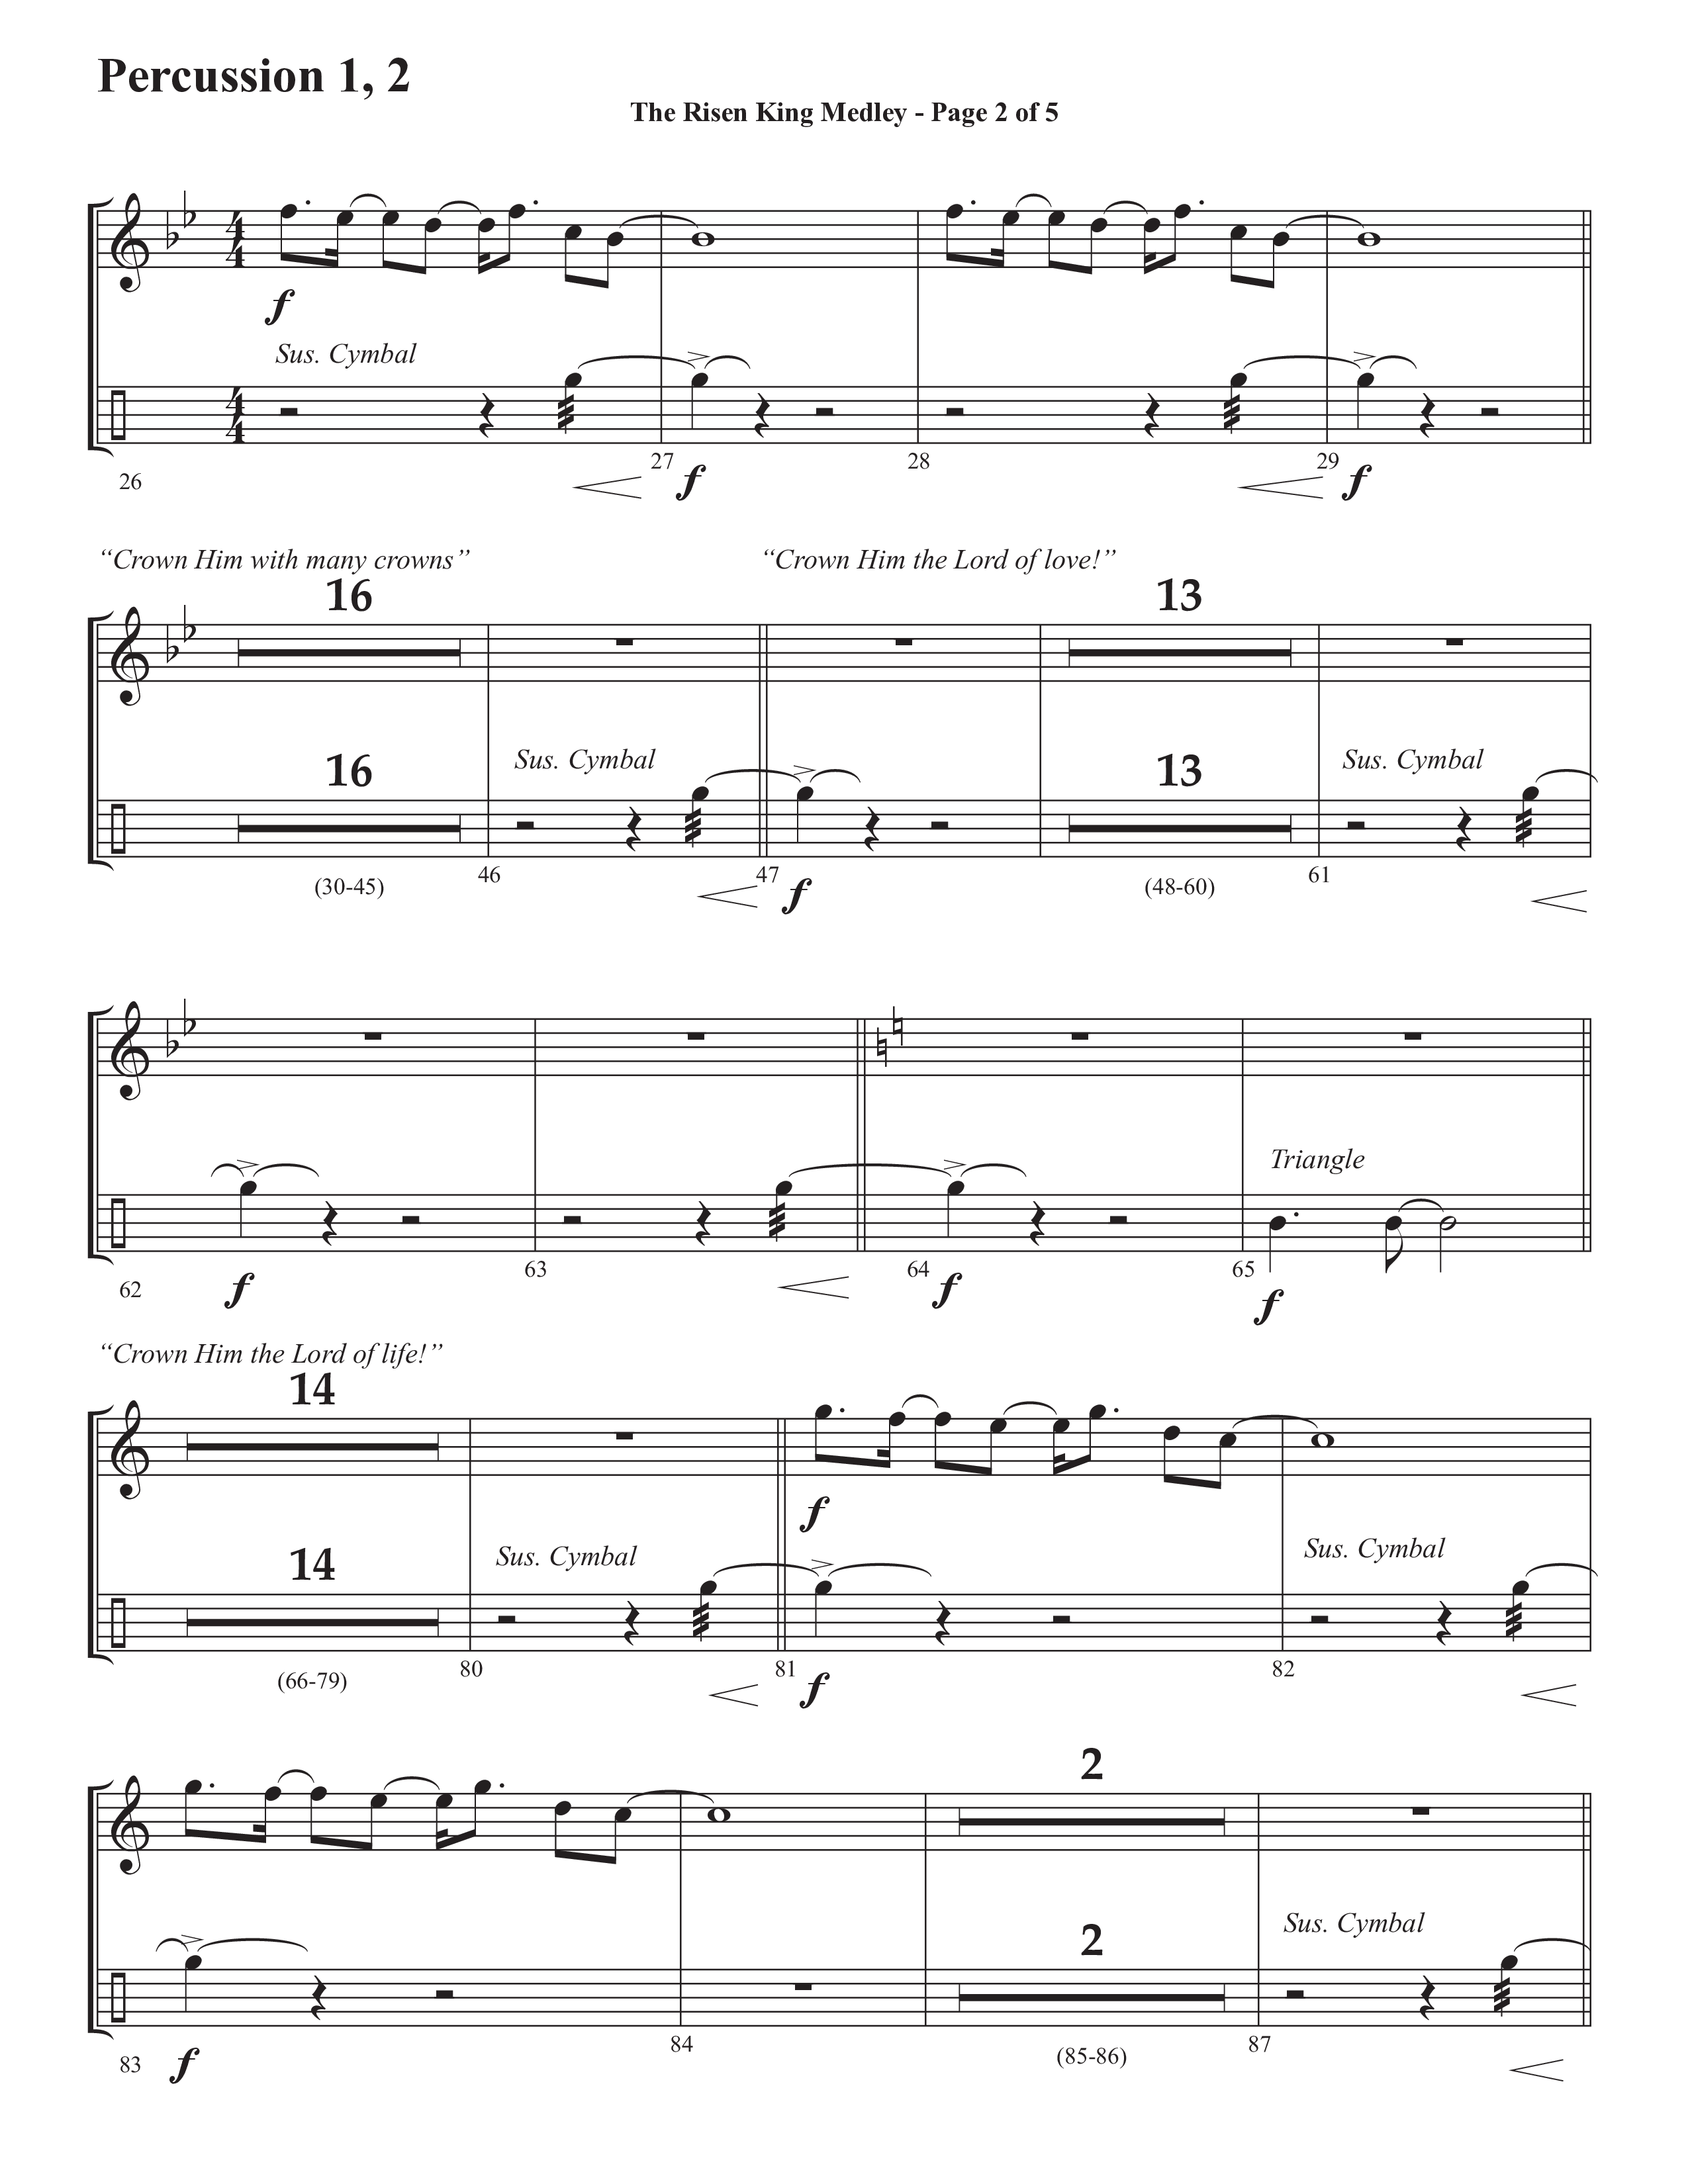 The Risen King Medley (Choral Anthem SATB) Percussion 1/2 (Semsen Music / Arr. John Bolin / Orch. Cliff Duren)